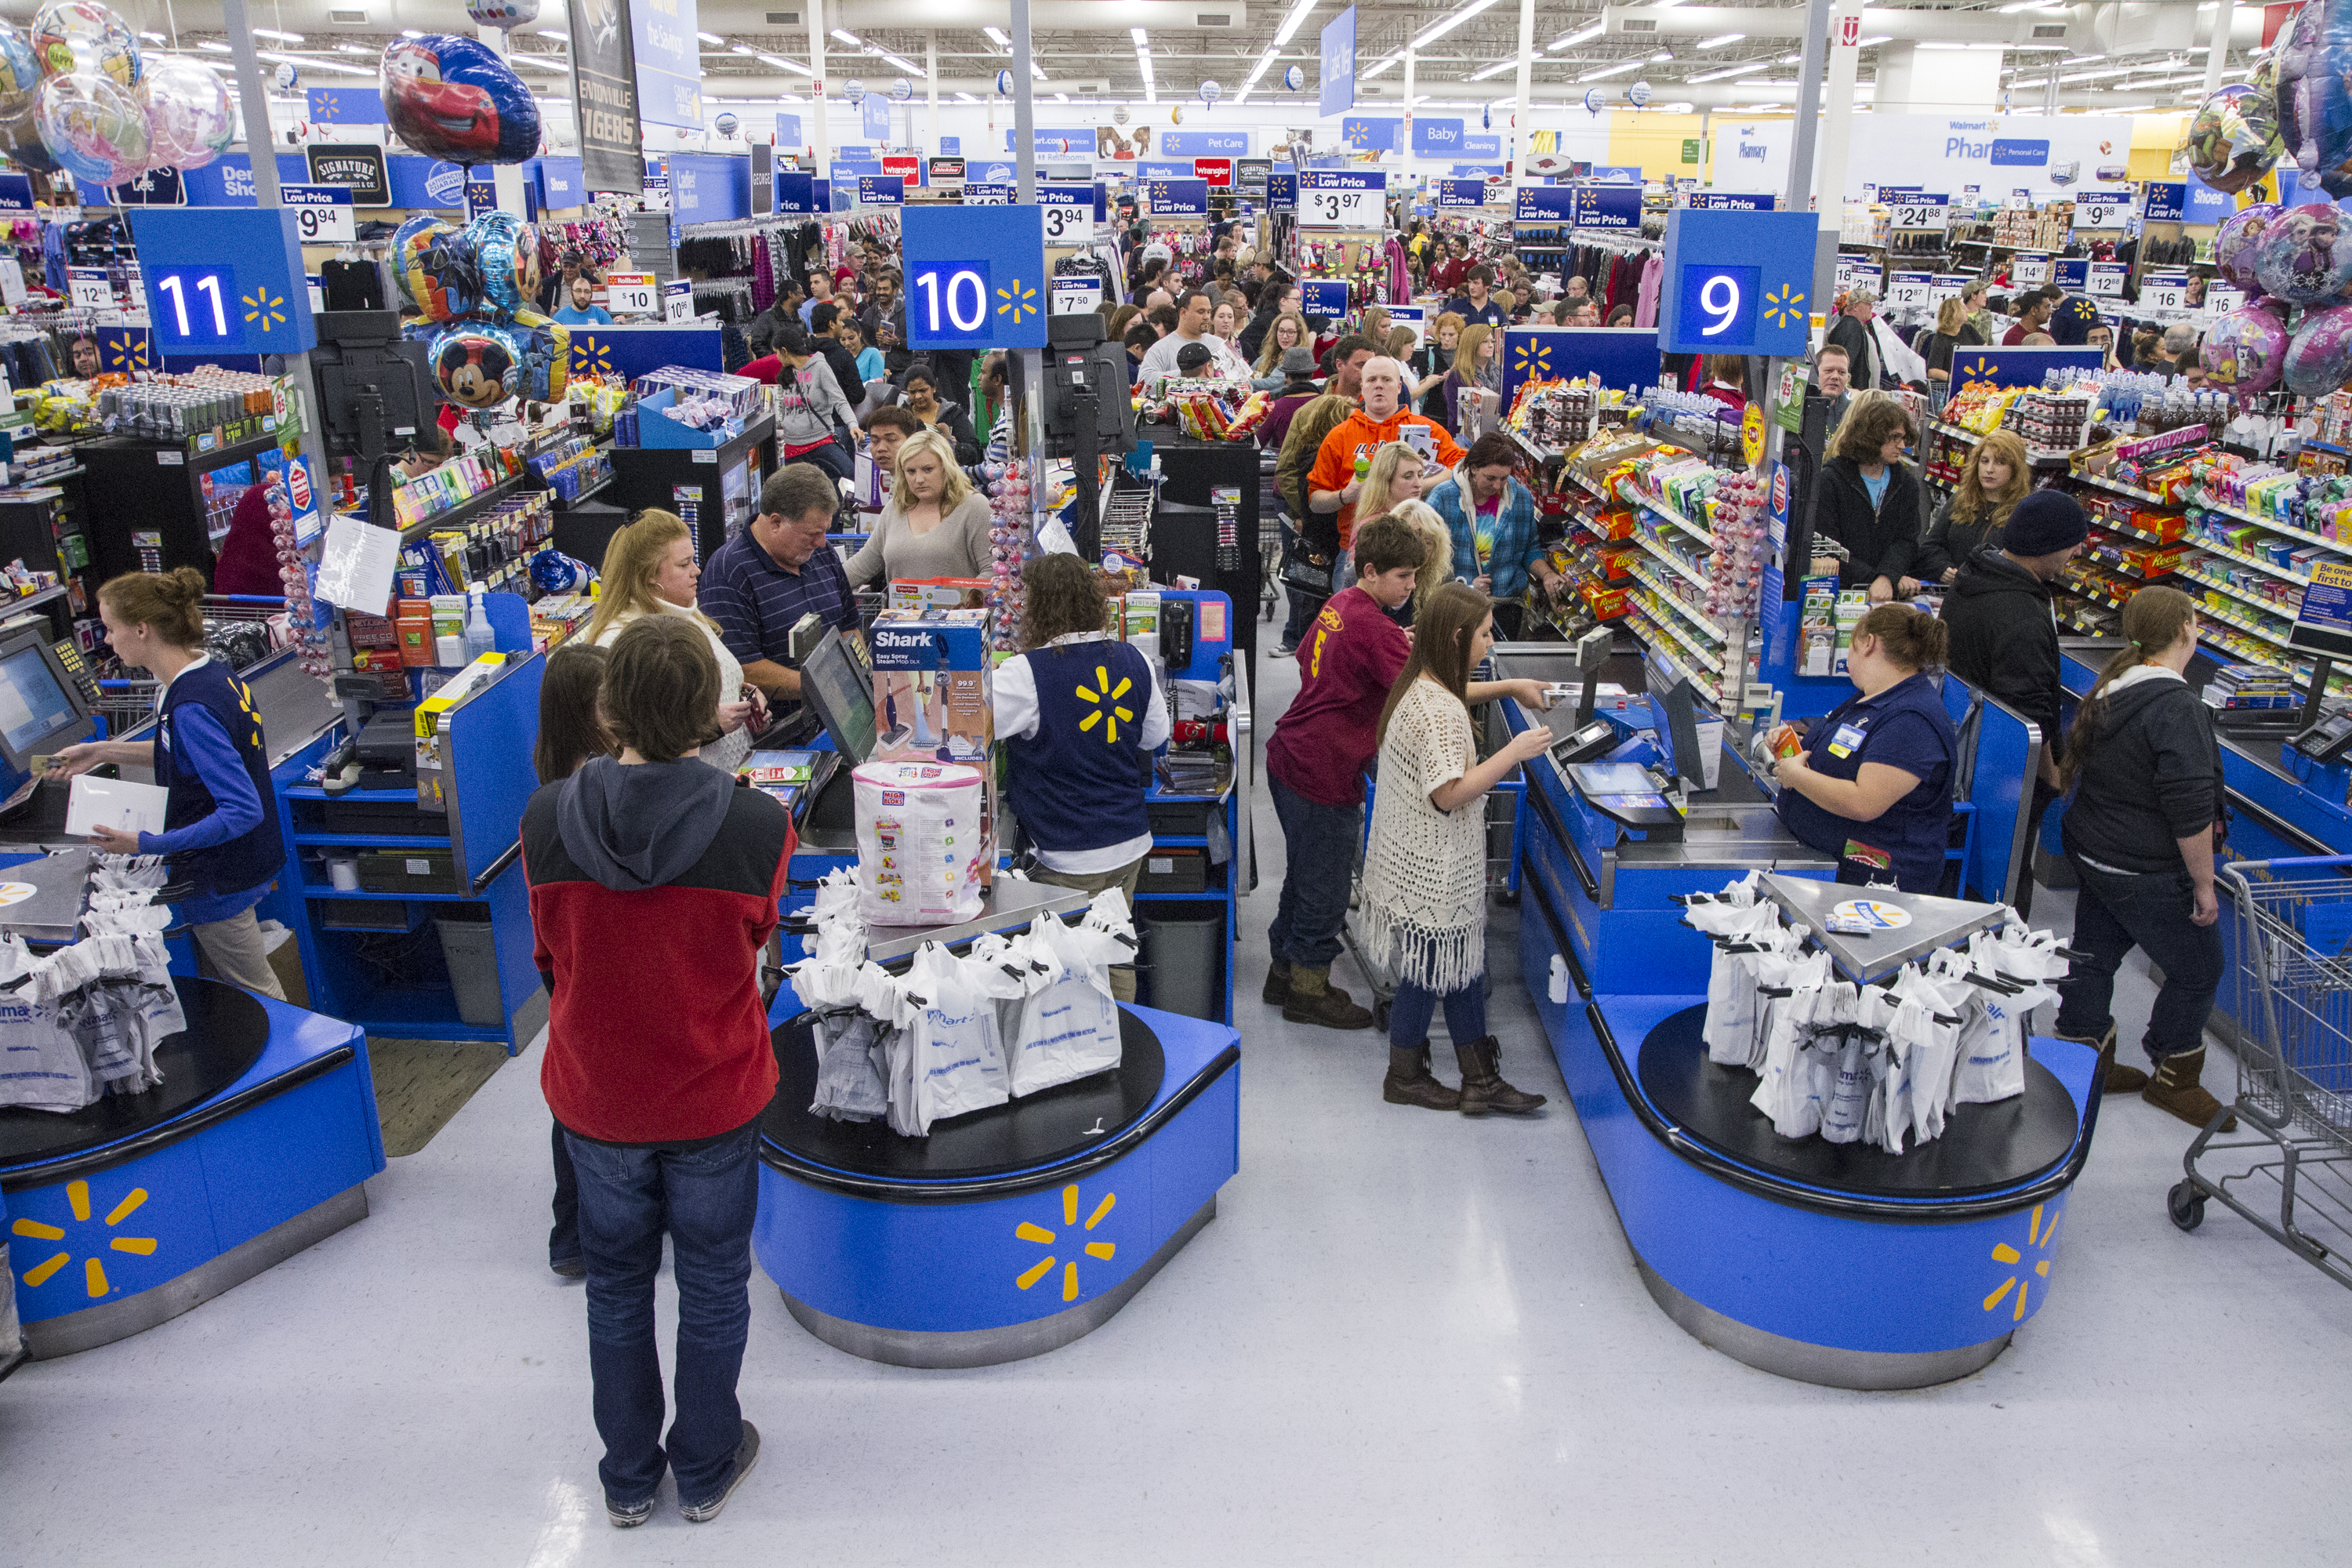 Walmart's Black Friday Starts Strong in Bentonville